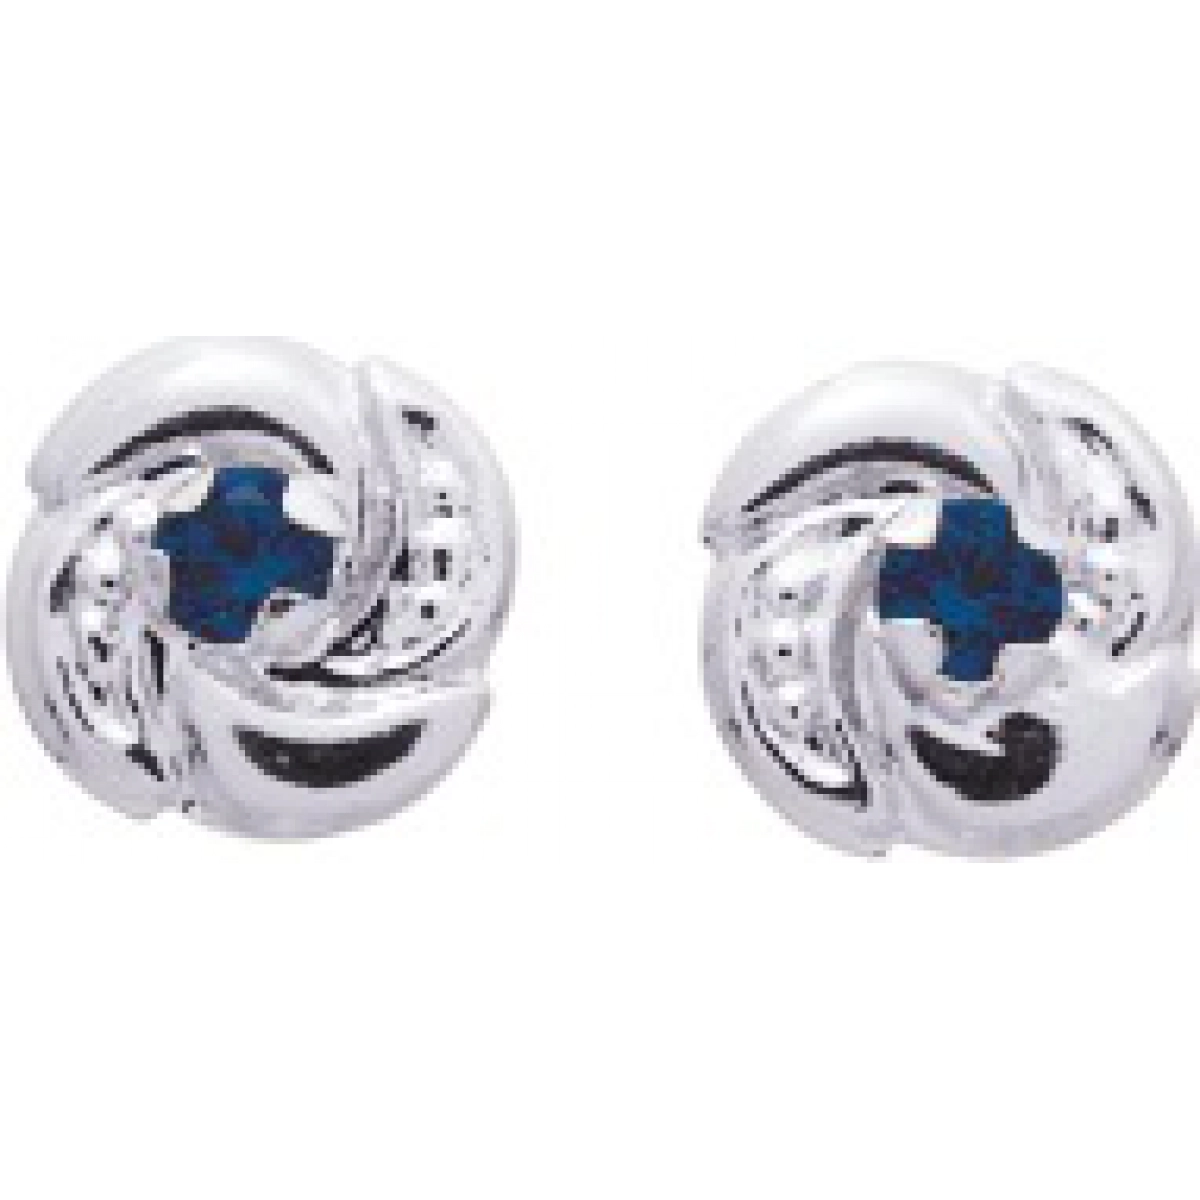 Earrings pair Sapphire 9K WG  Lua Blanca  9K8361GS.0